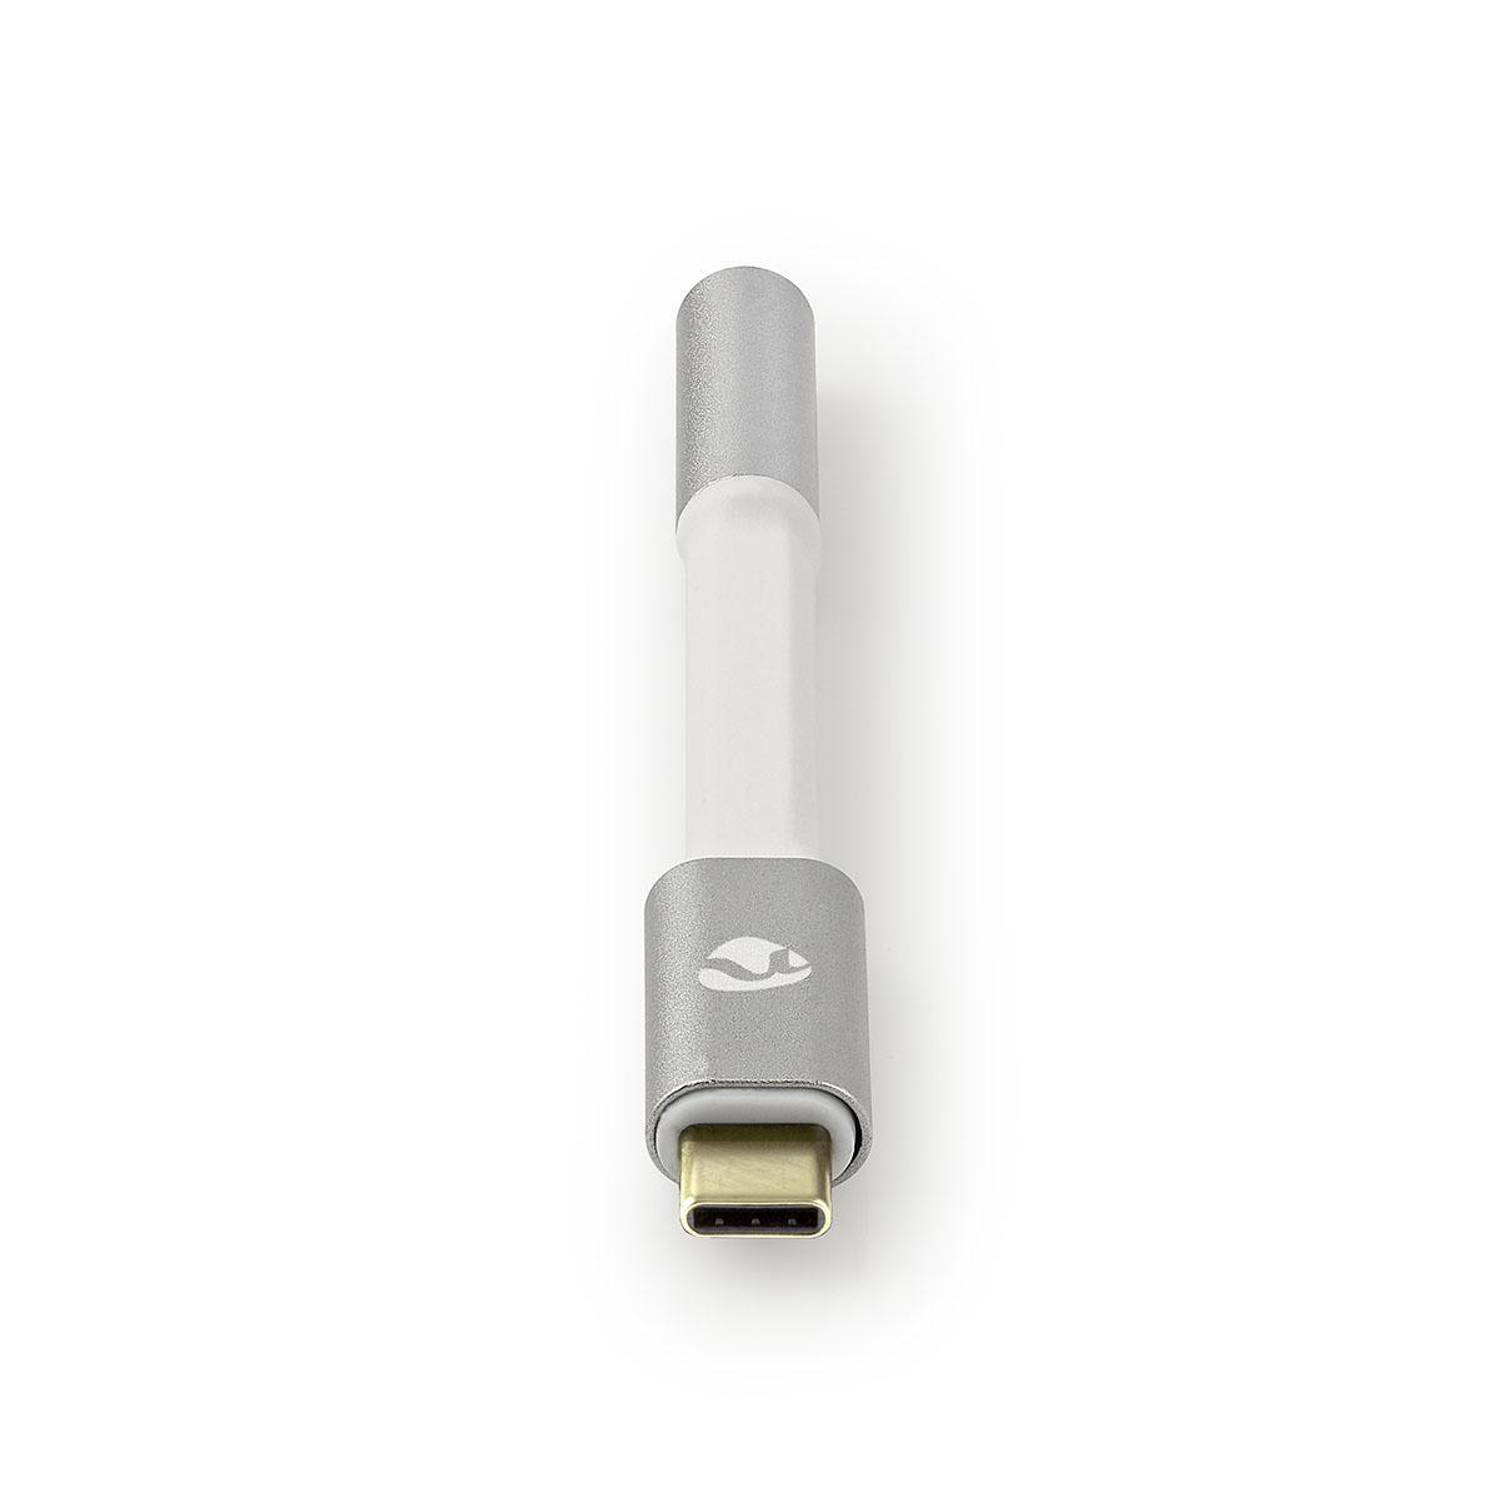 Nedis USB-C Adapter - CCTB65950AL008